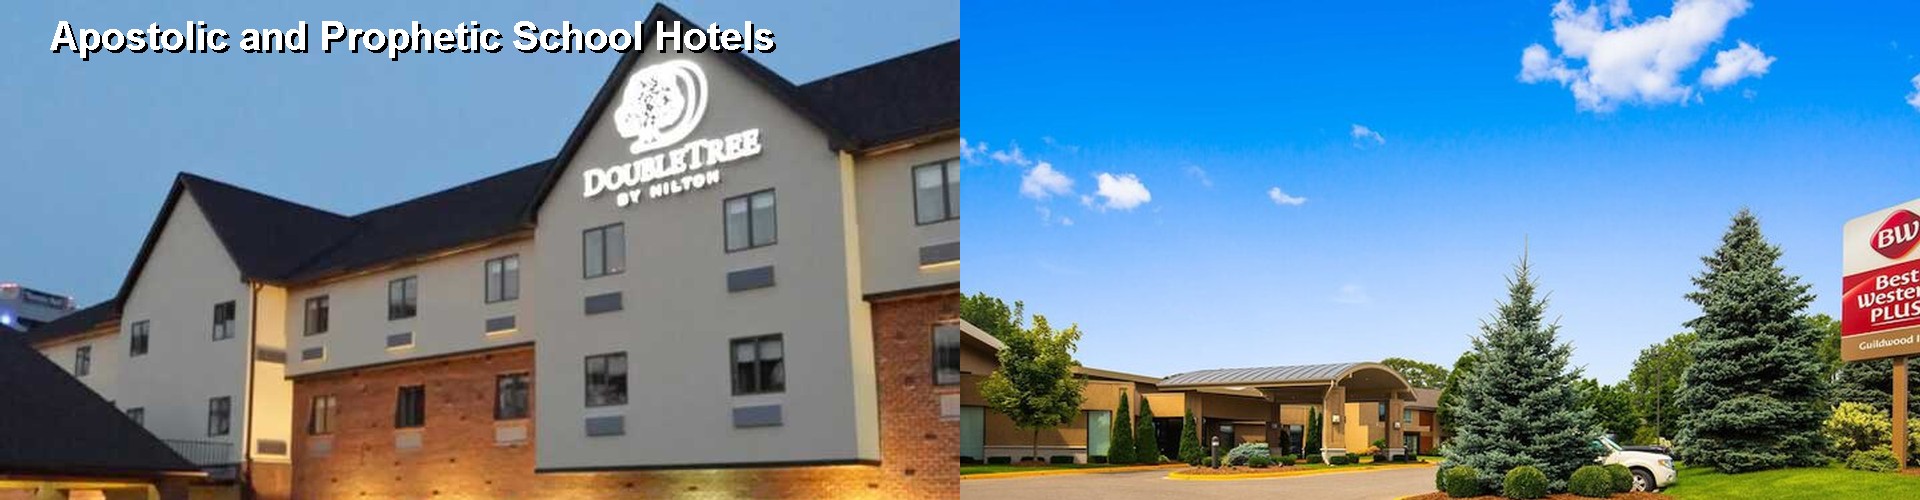 5 Best Hotels near Apostolic and Prophetic School